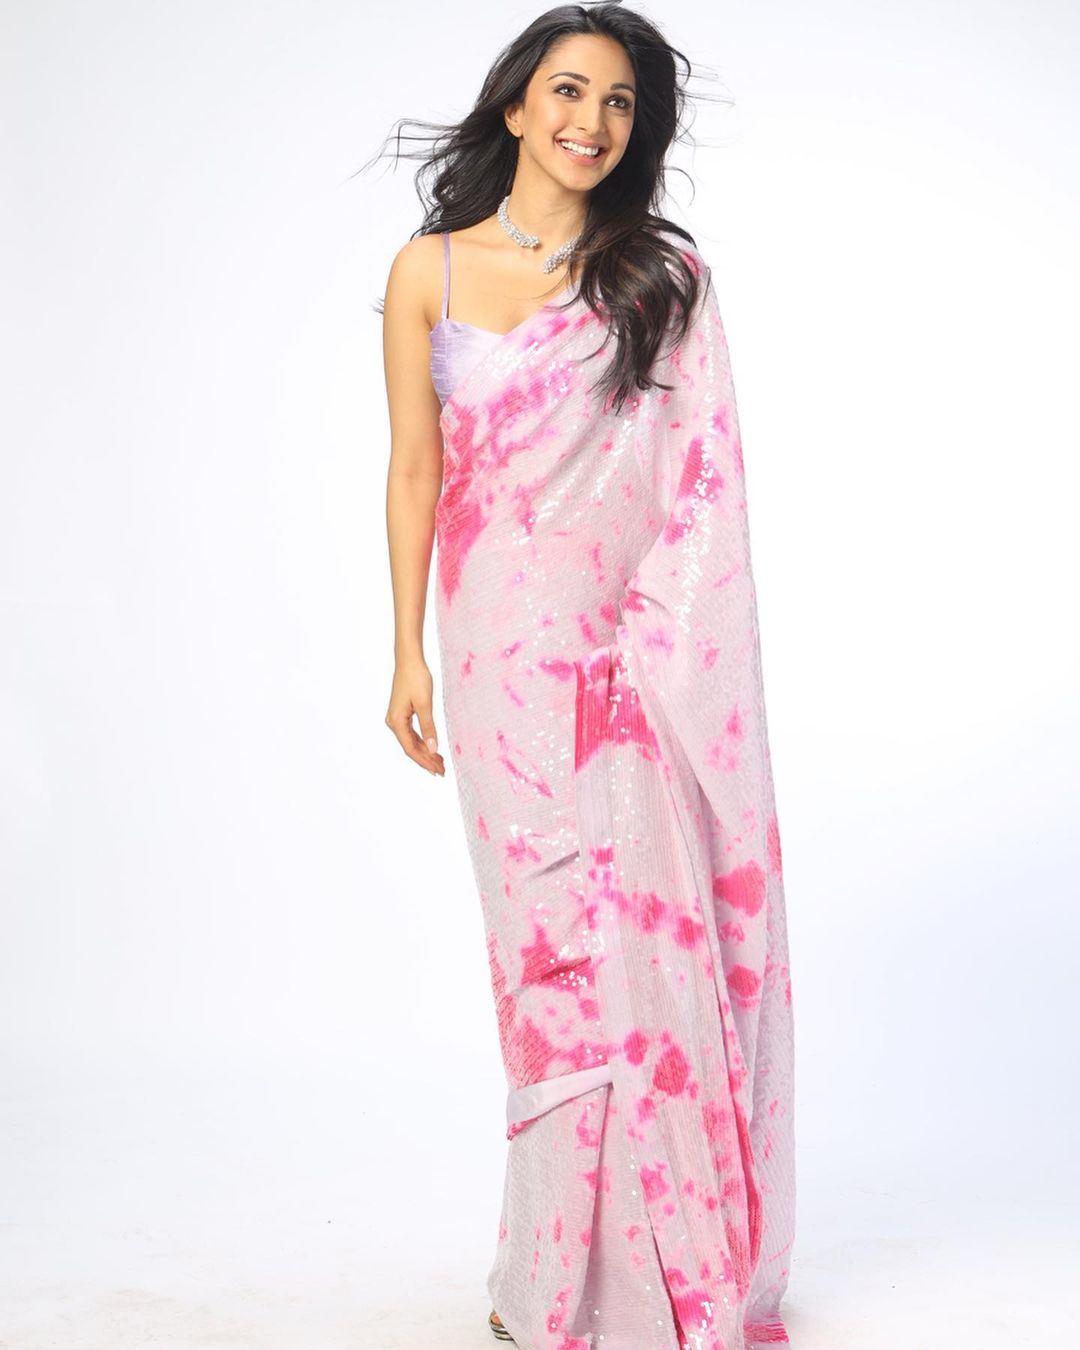 Kiara Advani looks pretty in the sequinned tie-dye saree